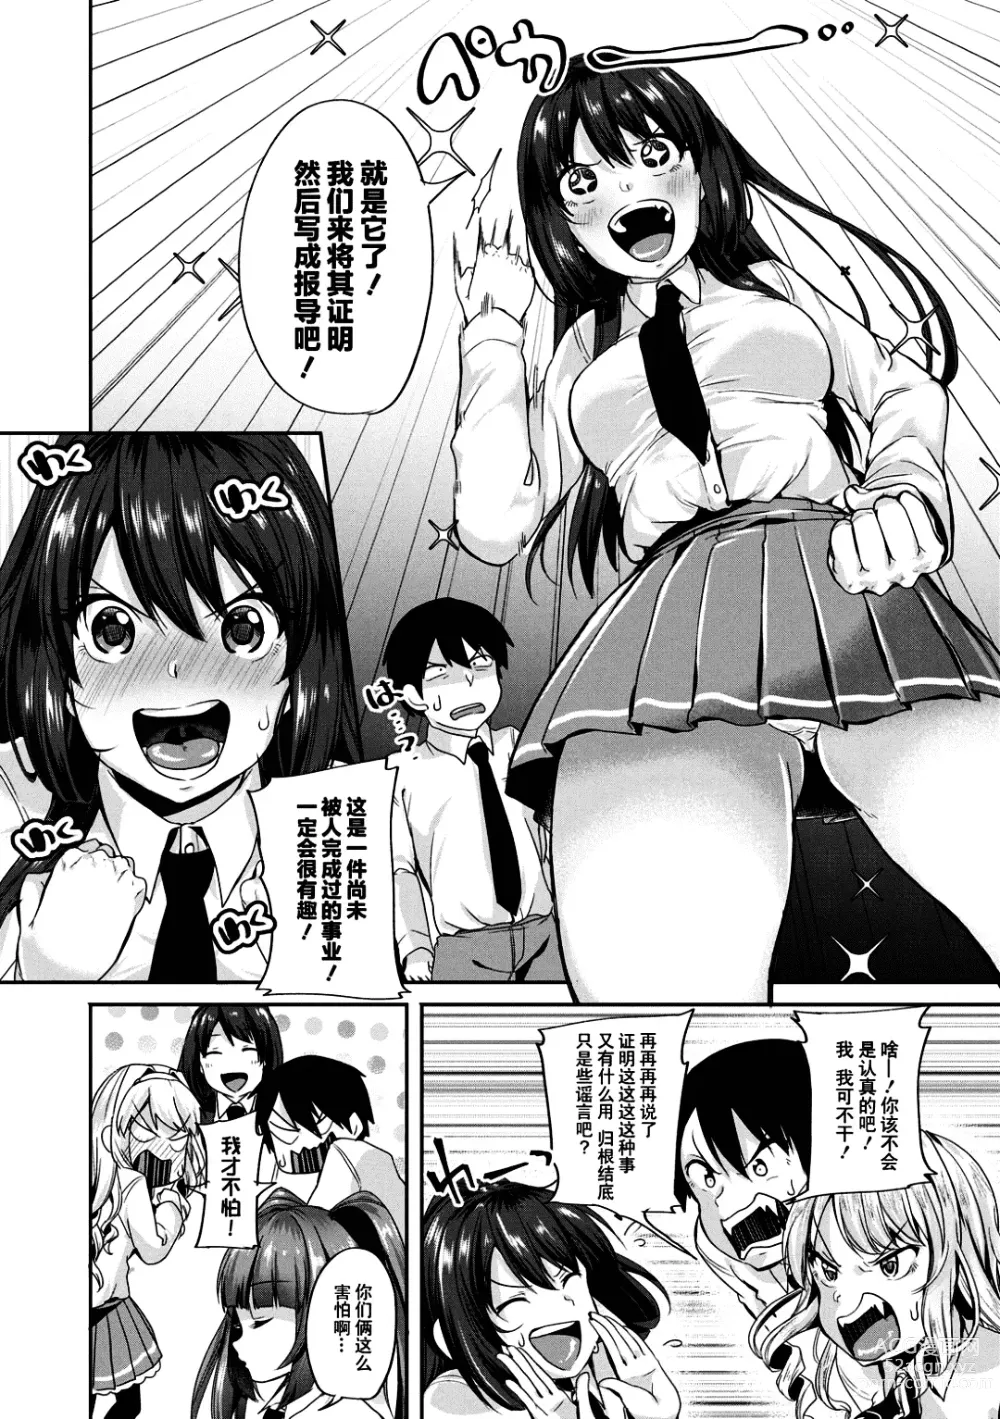 Page 7 of manga 好朋友们一起被玩坏吧 (decensored)